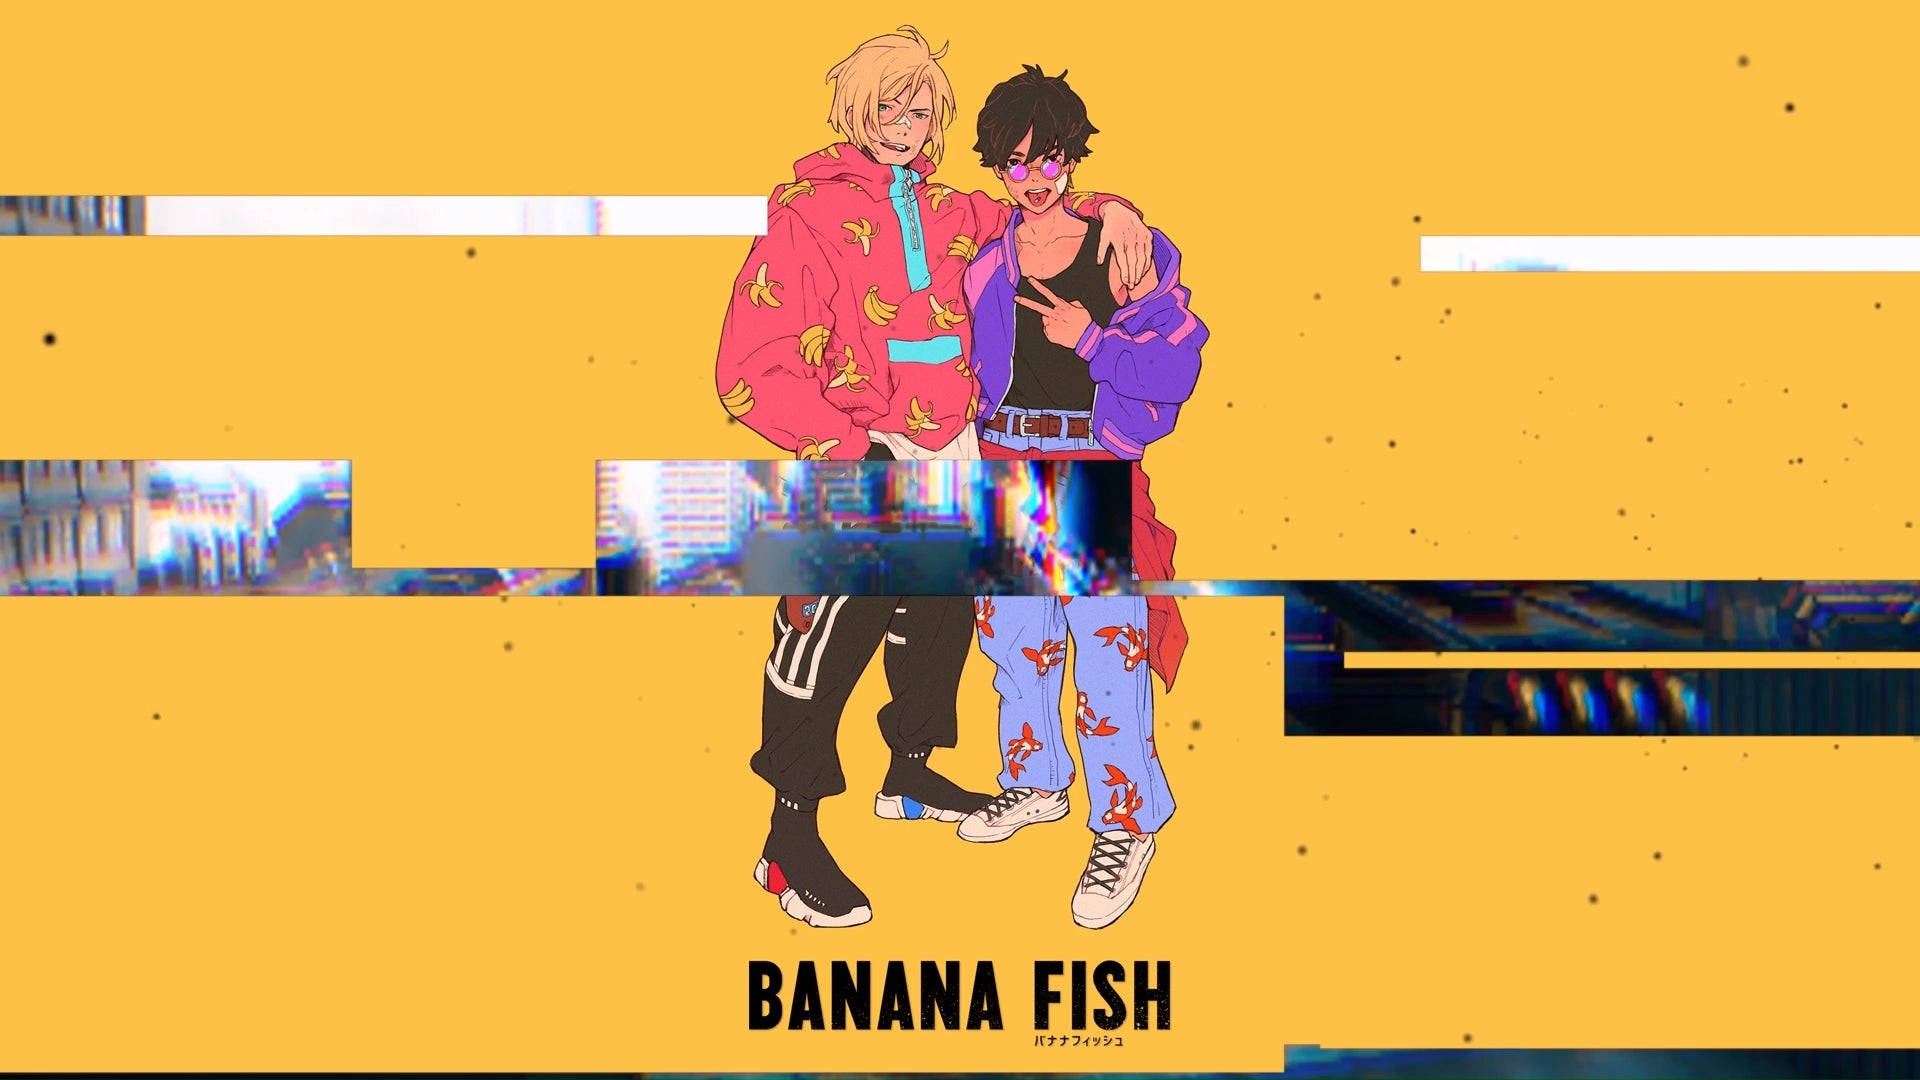 Banana Fish Eiji Okumura HD Banana Fish Anime Wallpapers, HD Wallpapers